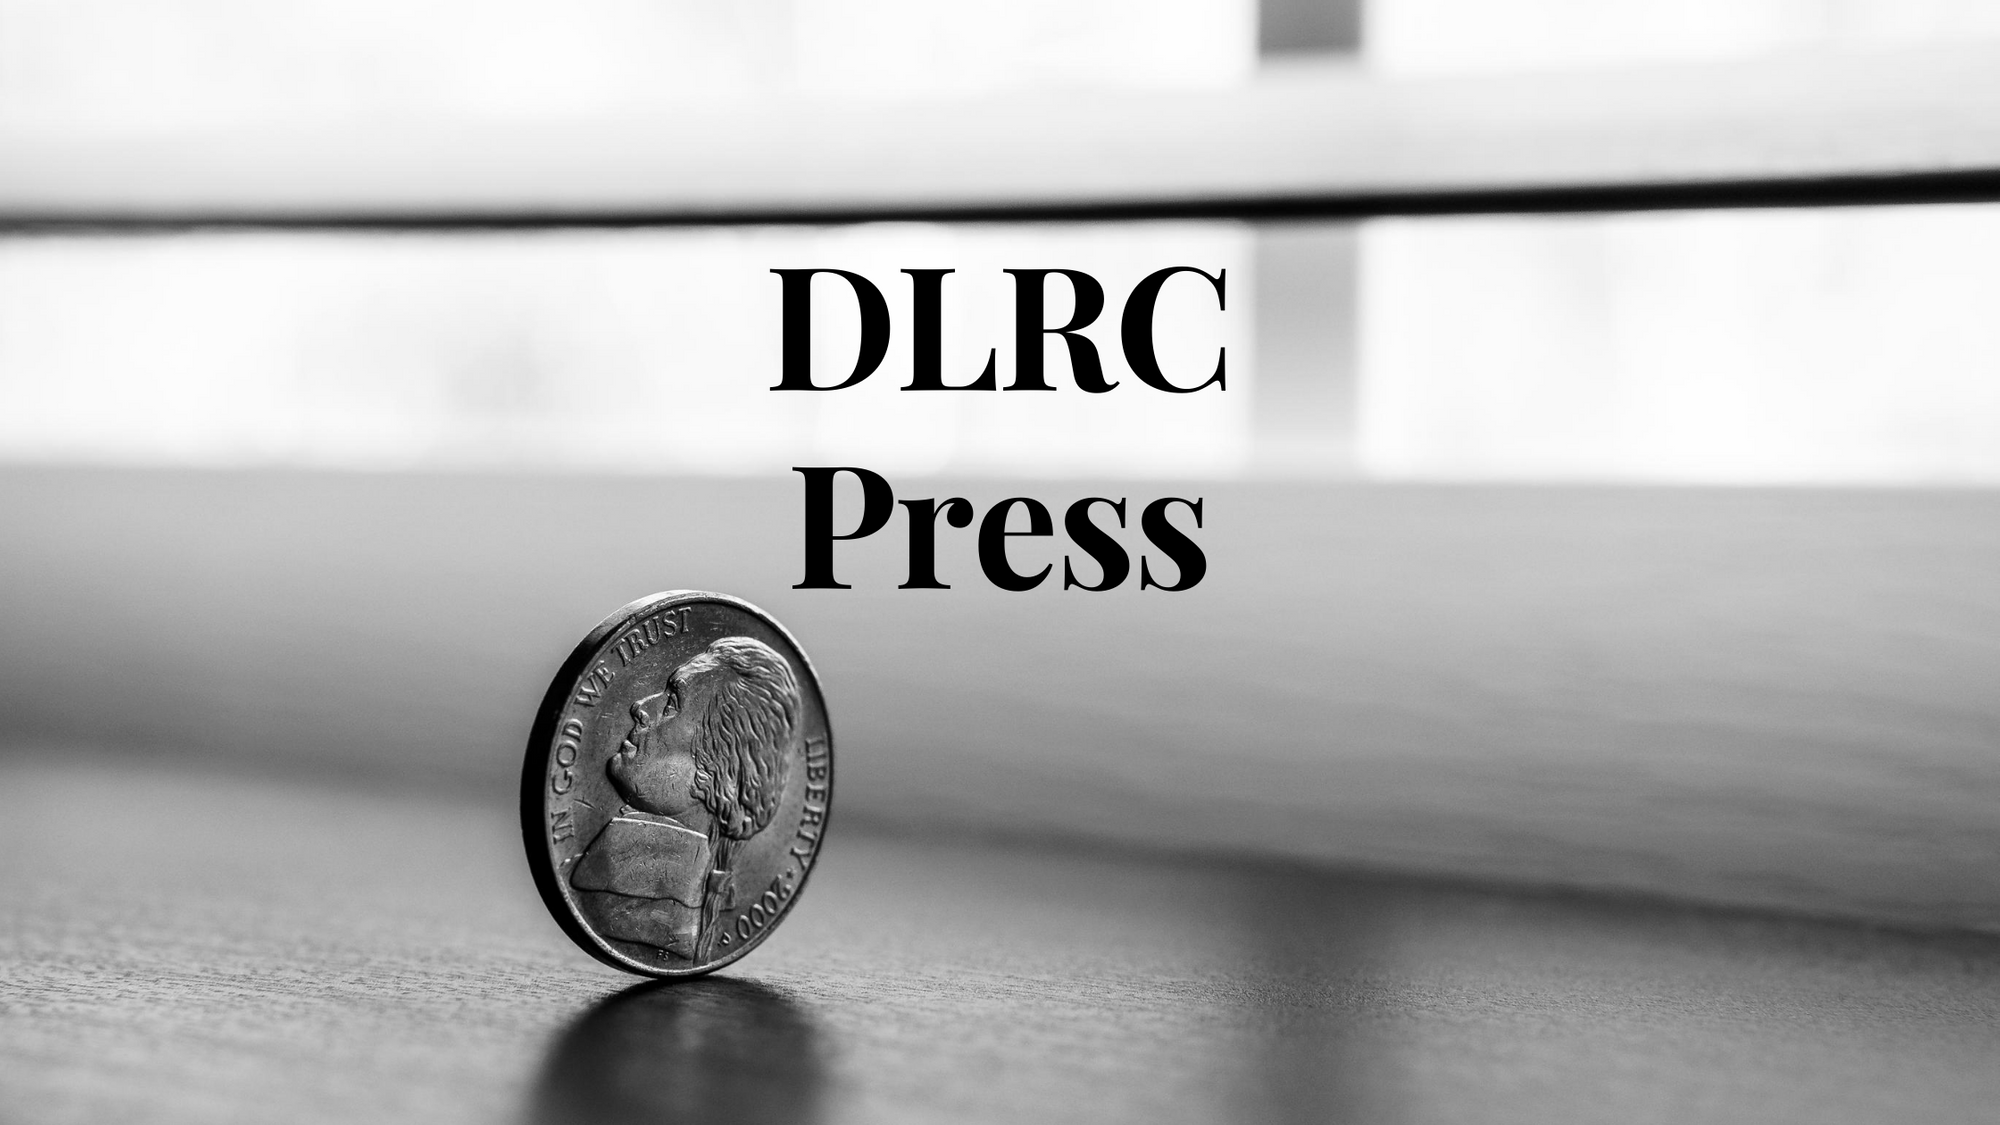 View the Entire DLRC Press Catalog Online!